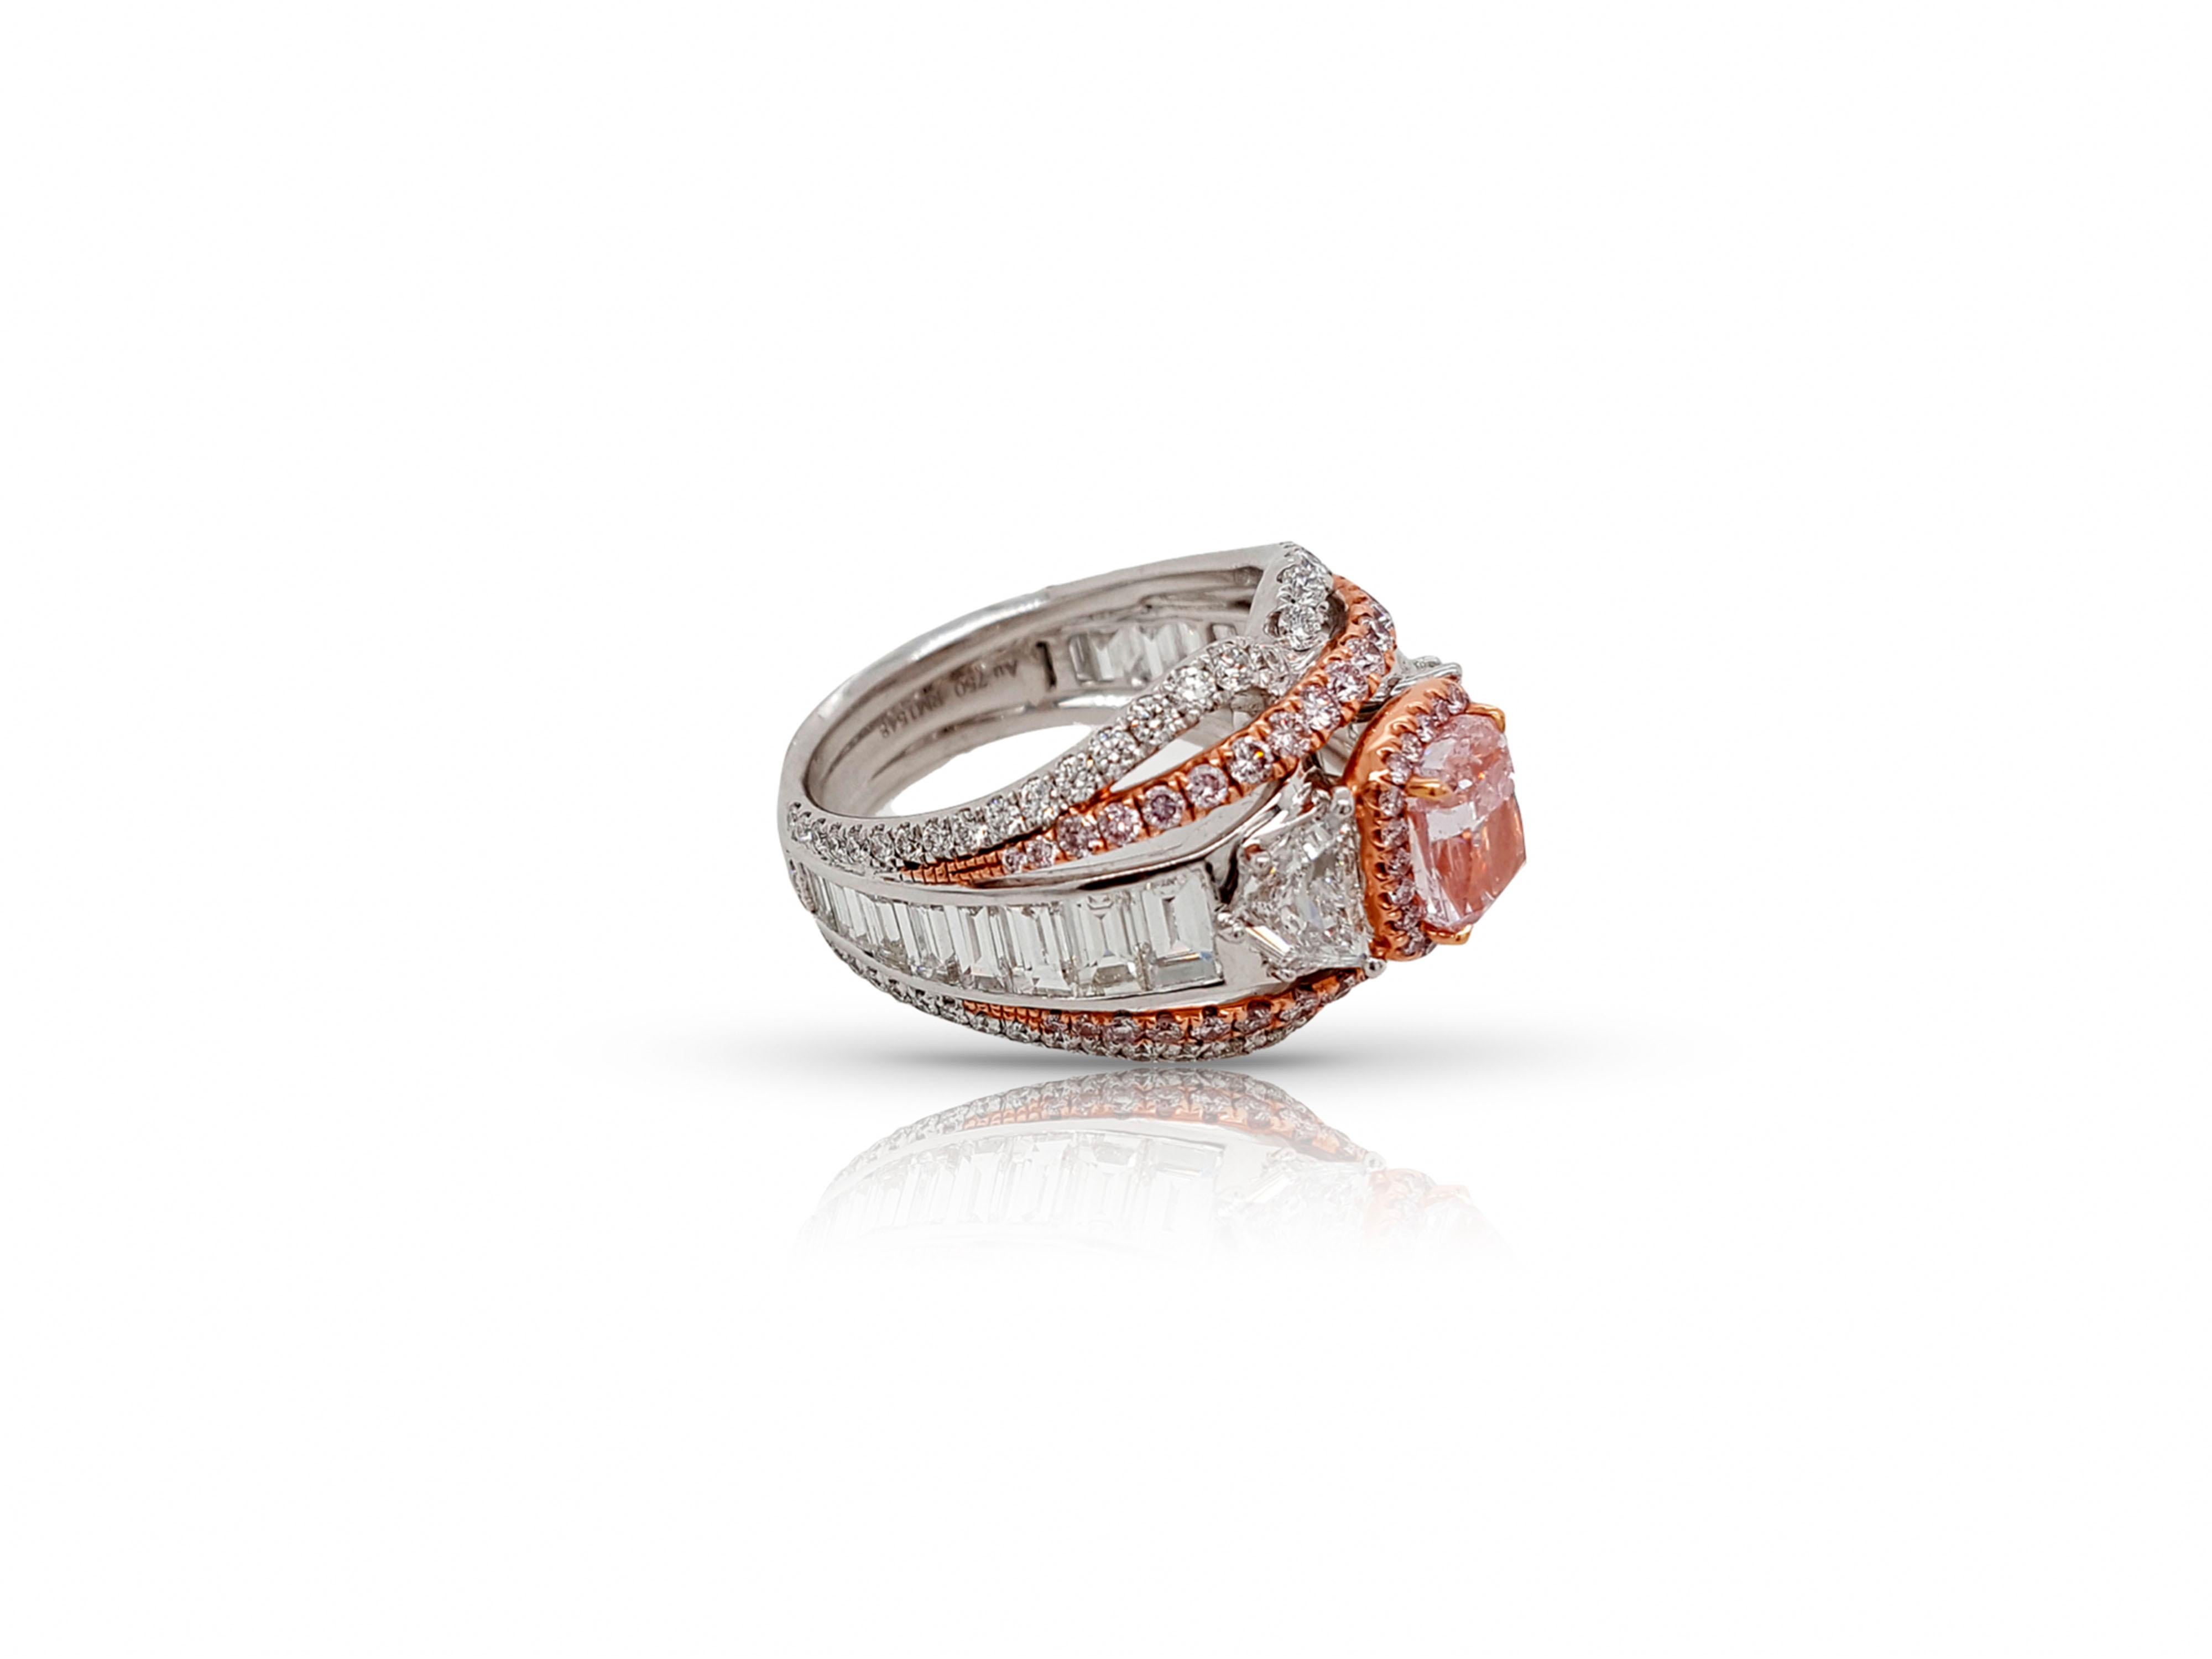 Taille coussin 1.32 Carat Fancy Intense Pink Diamond Cocktail Ring, 18K Gold GIA Certified (en anglais) en vente